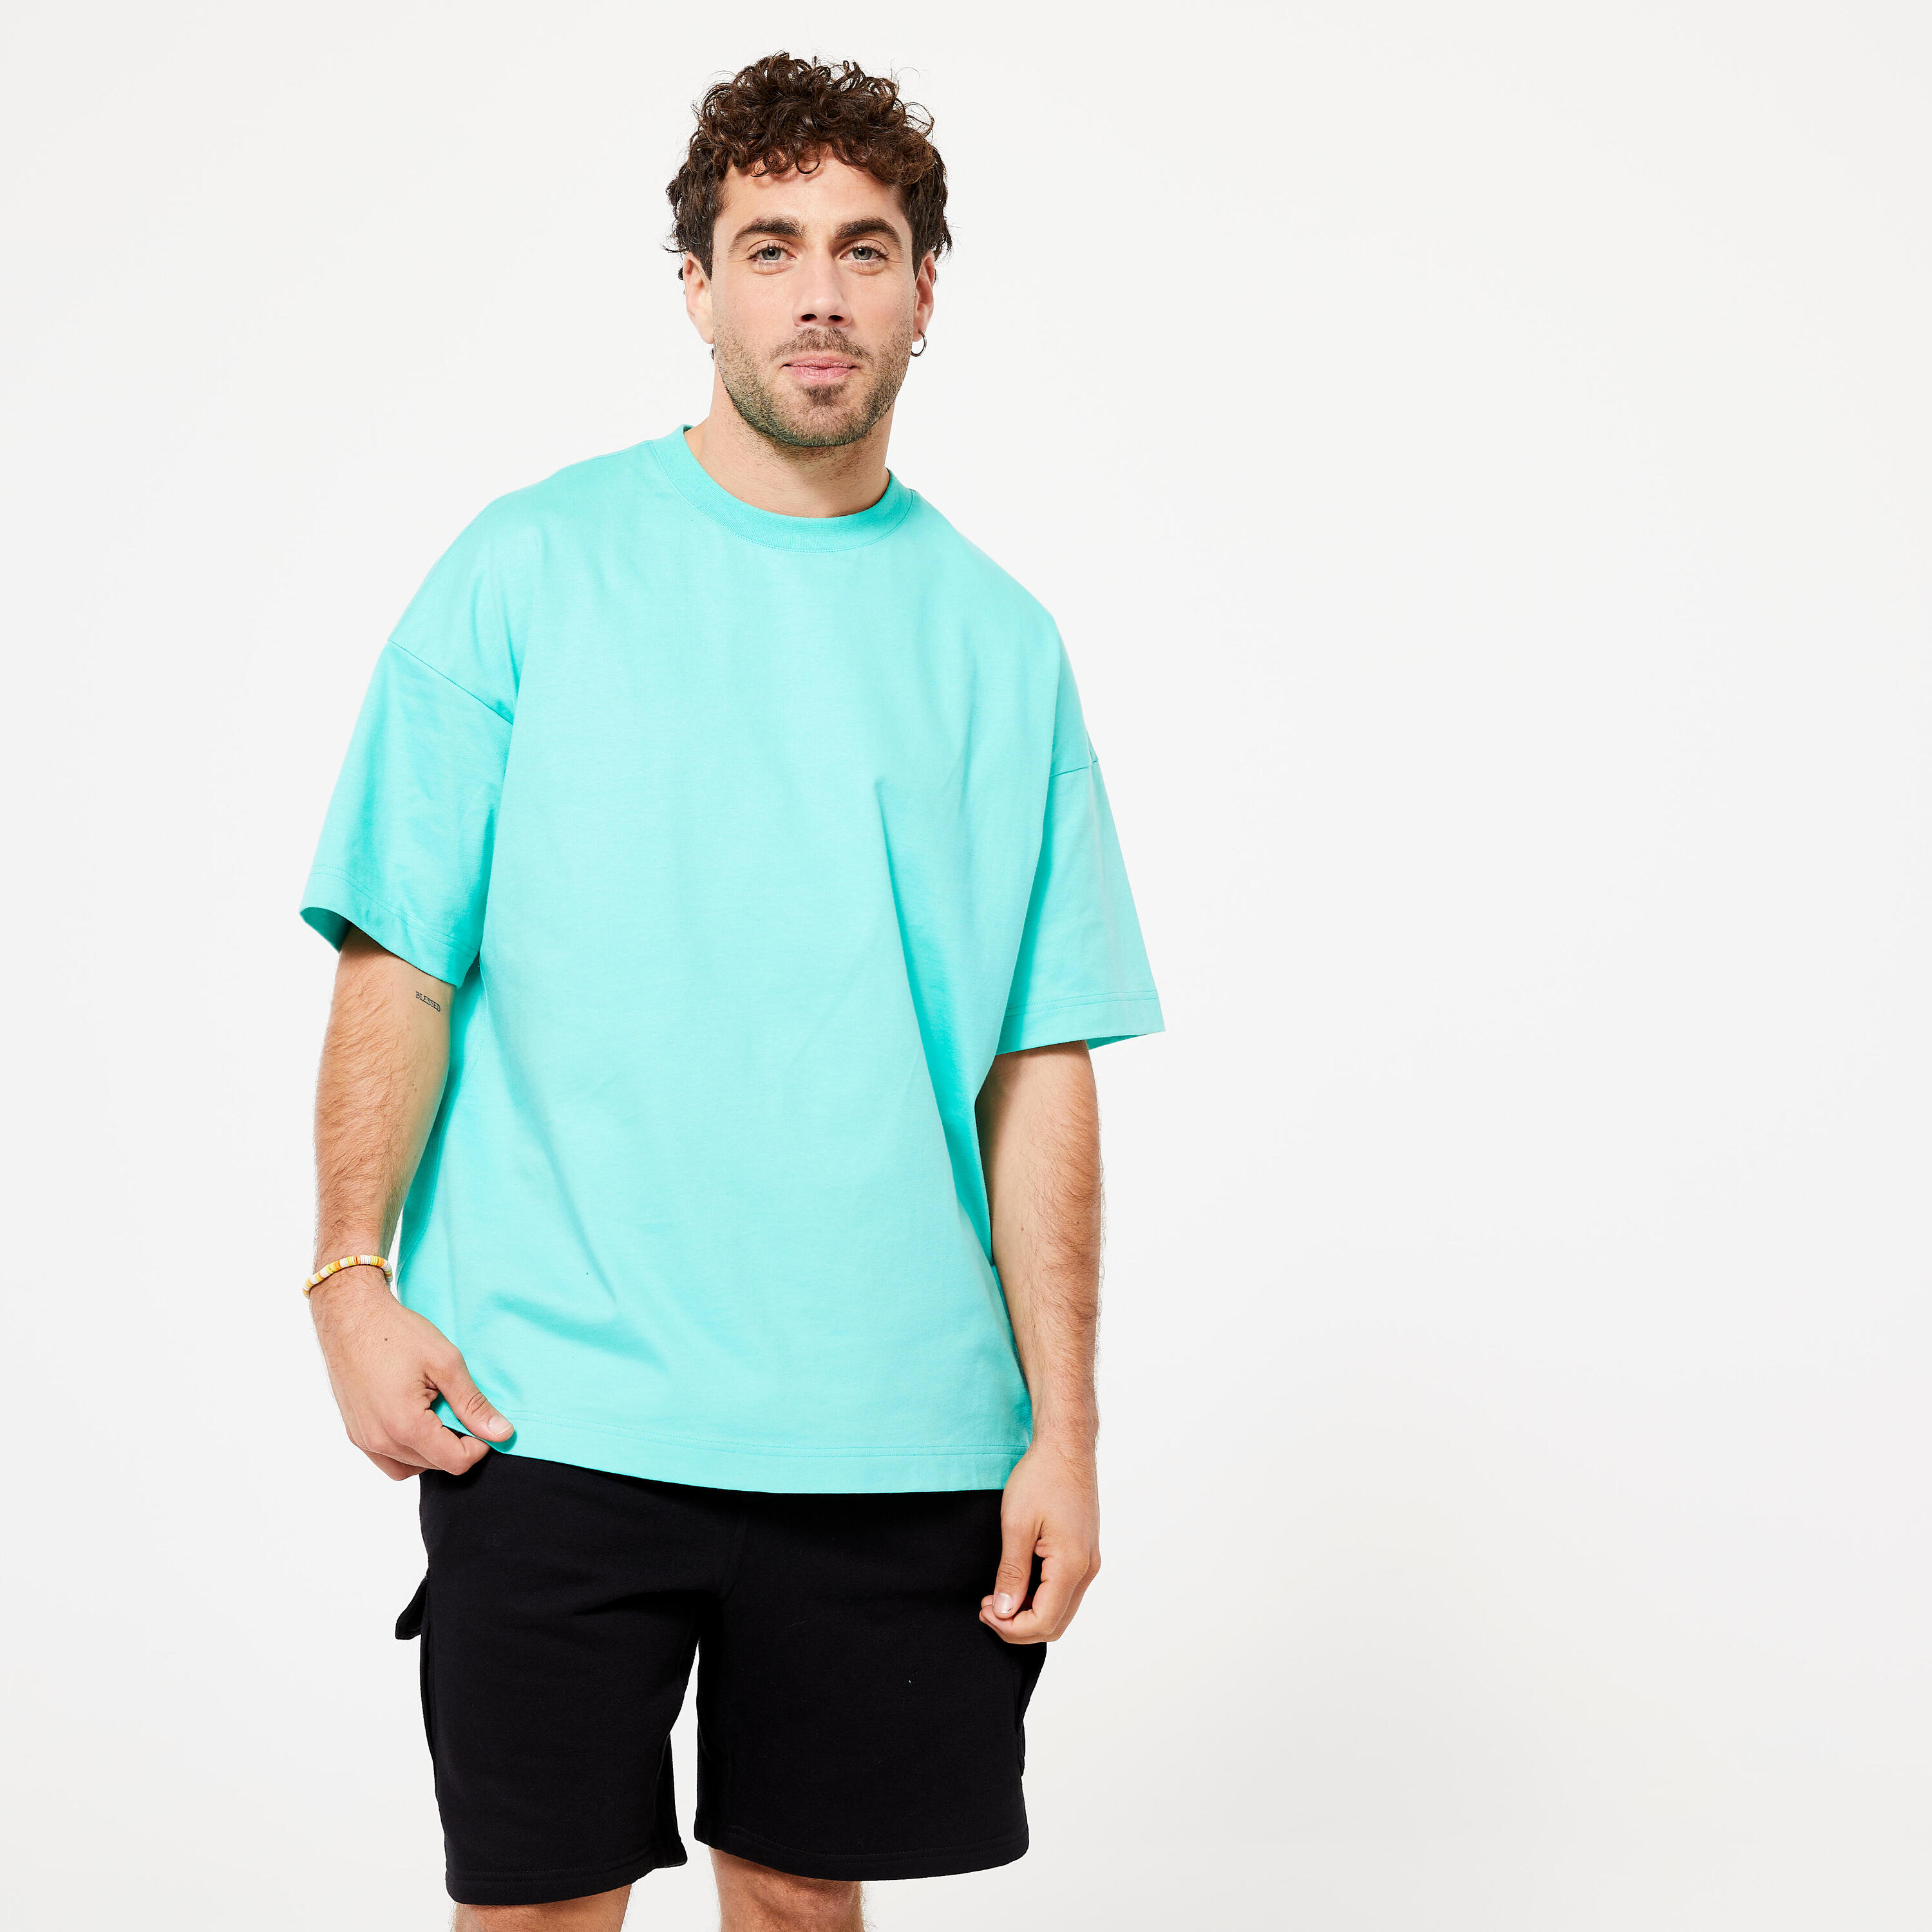 DOMYOS Men's Fitness Loose-Fit T-Shirt 520 - Fresh Mint Green